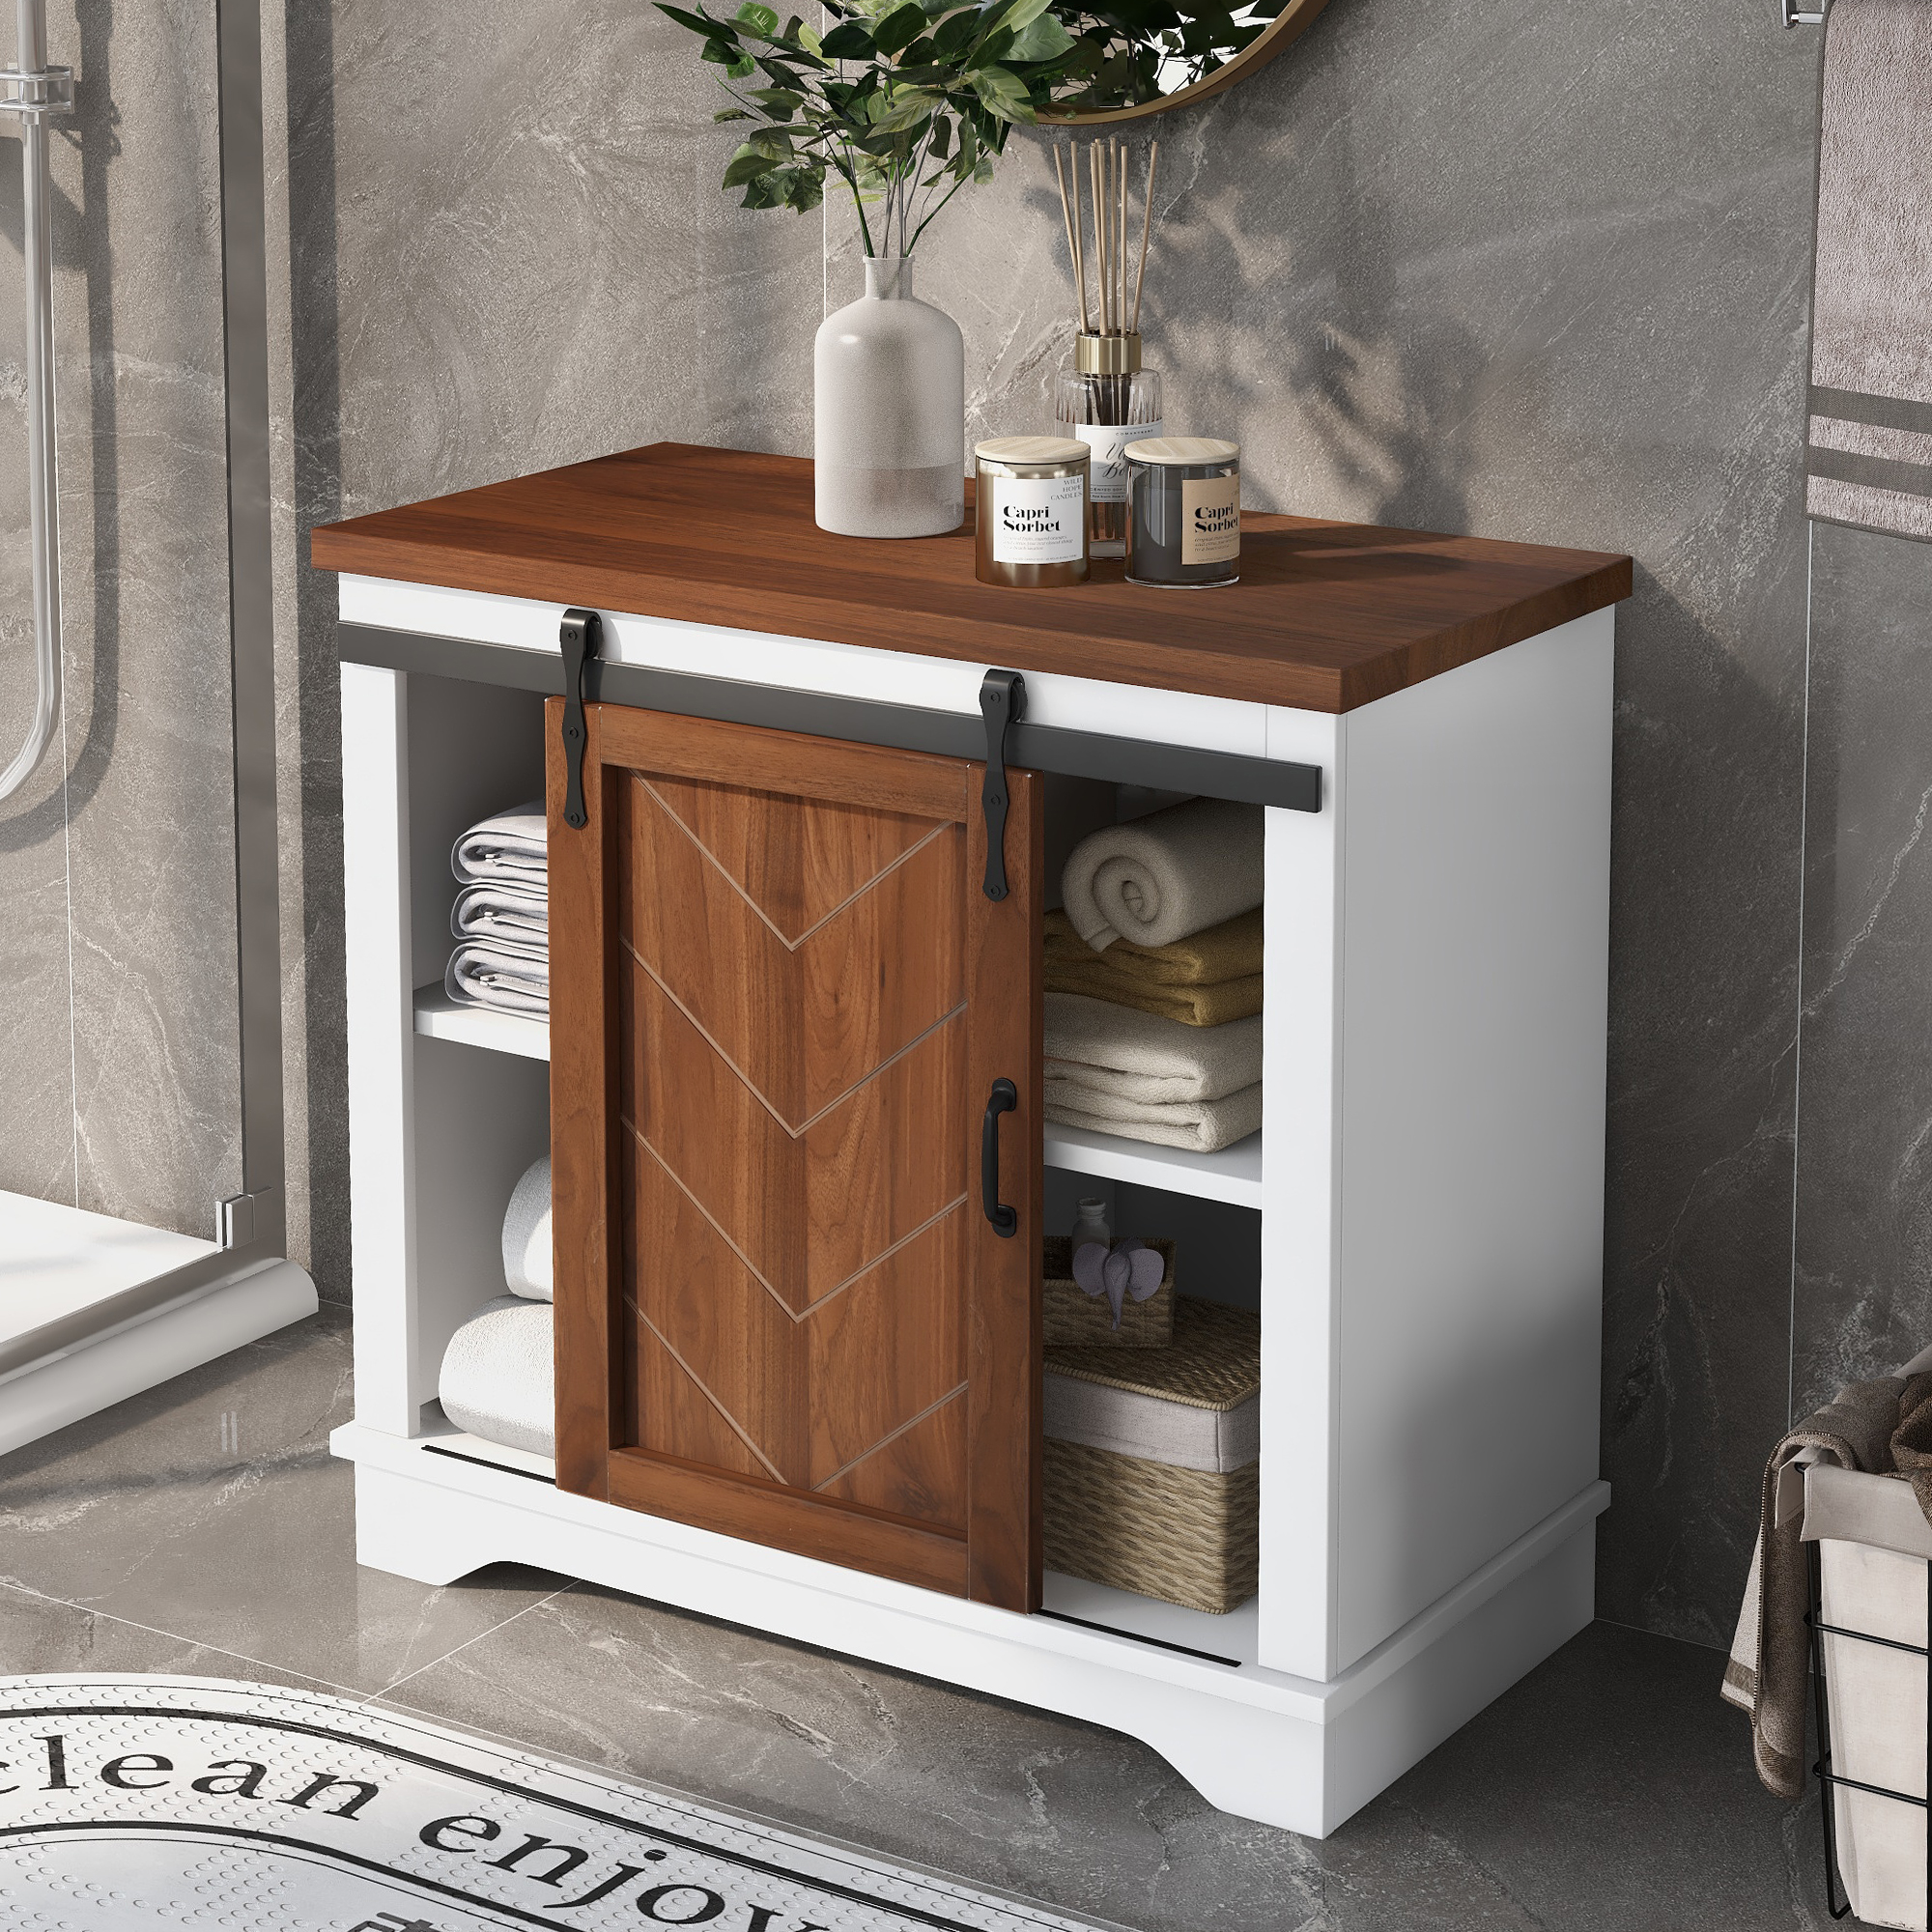 Bathroom Storage Cabinet, Brown And White - WF287851AAK